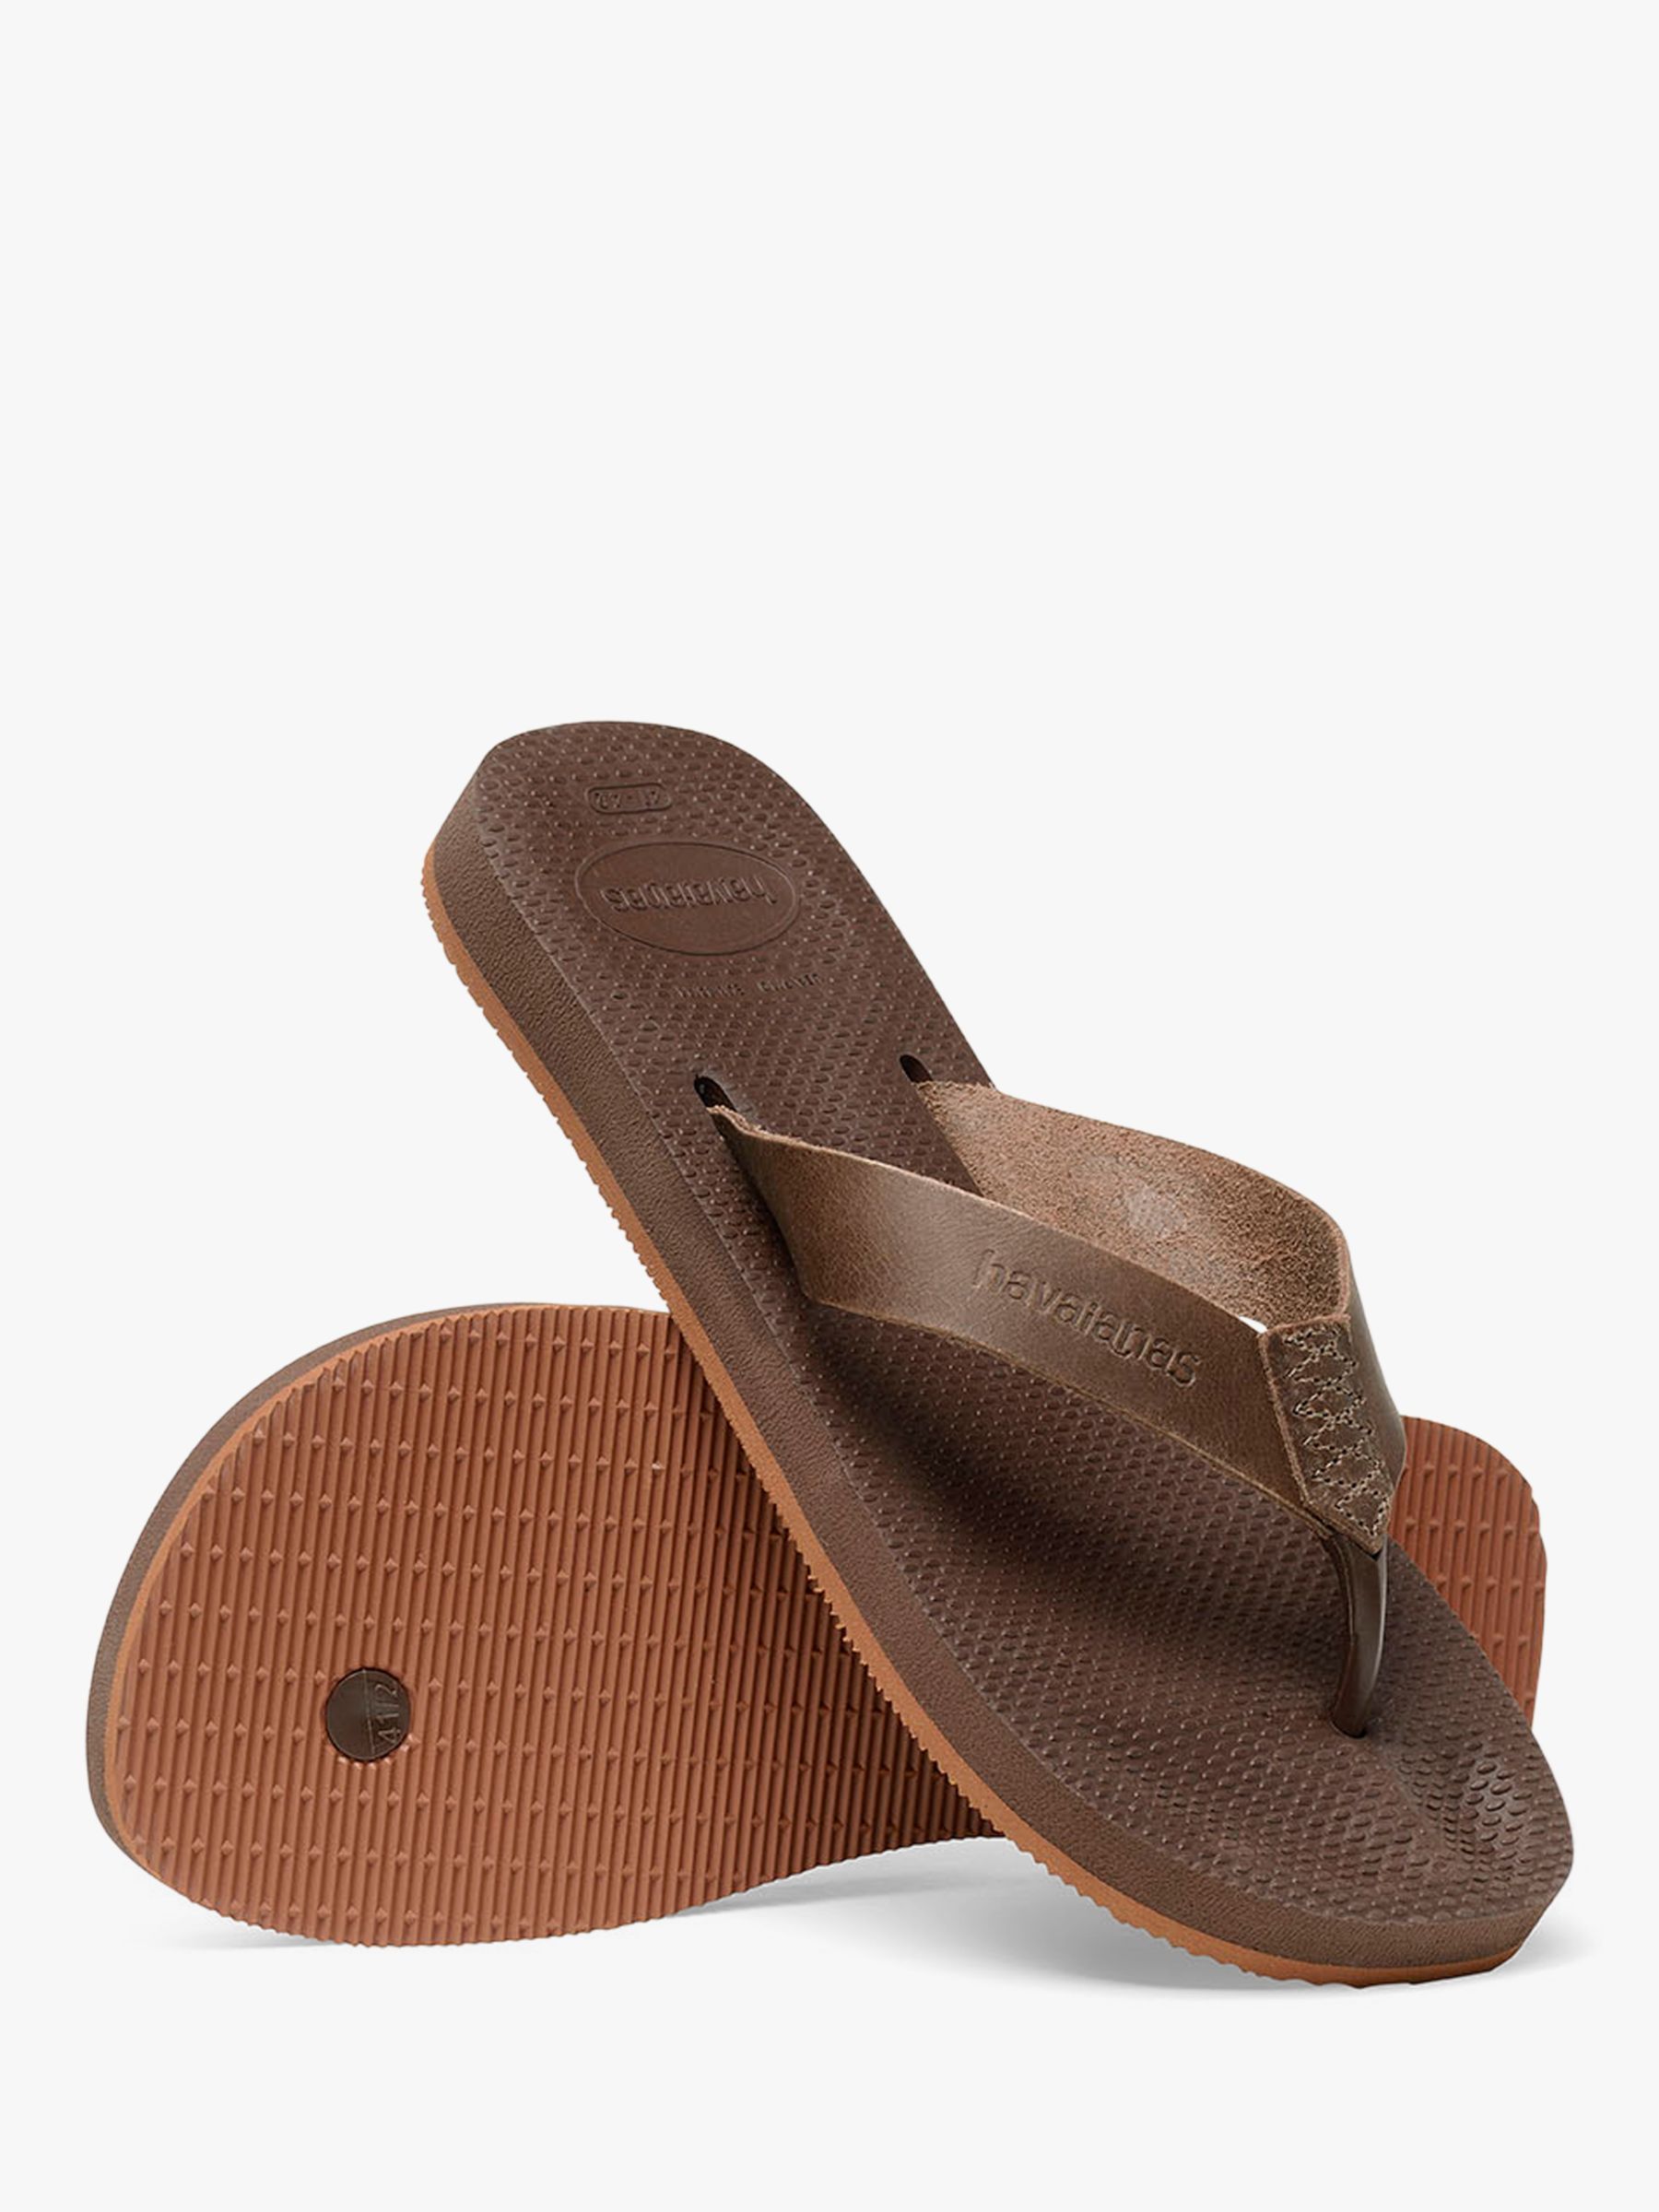 havaianas leather flip flops